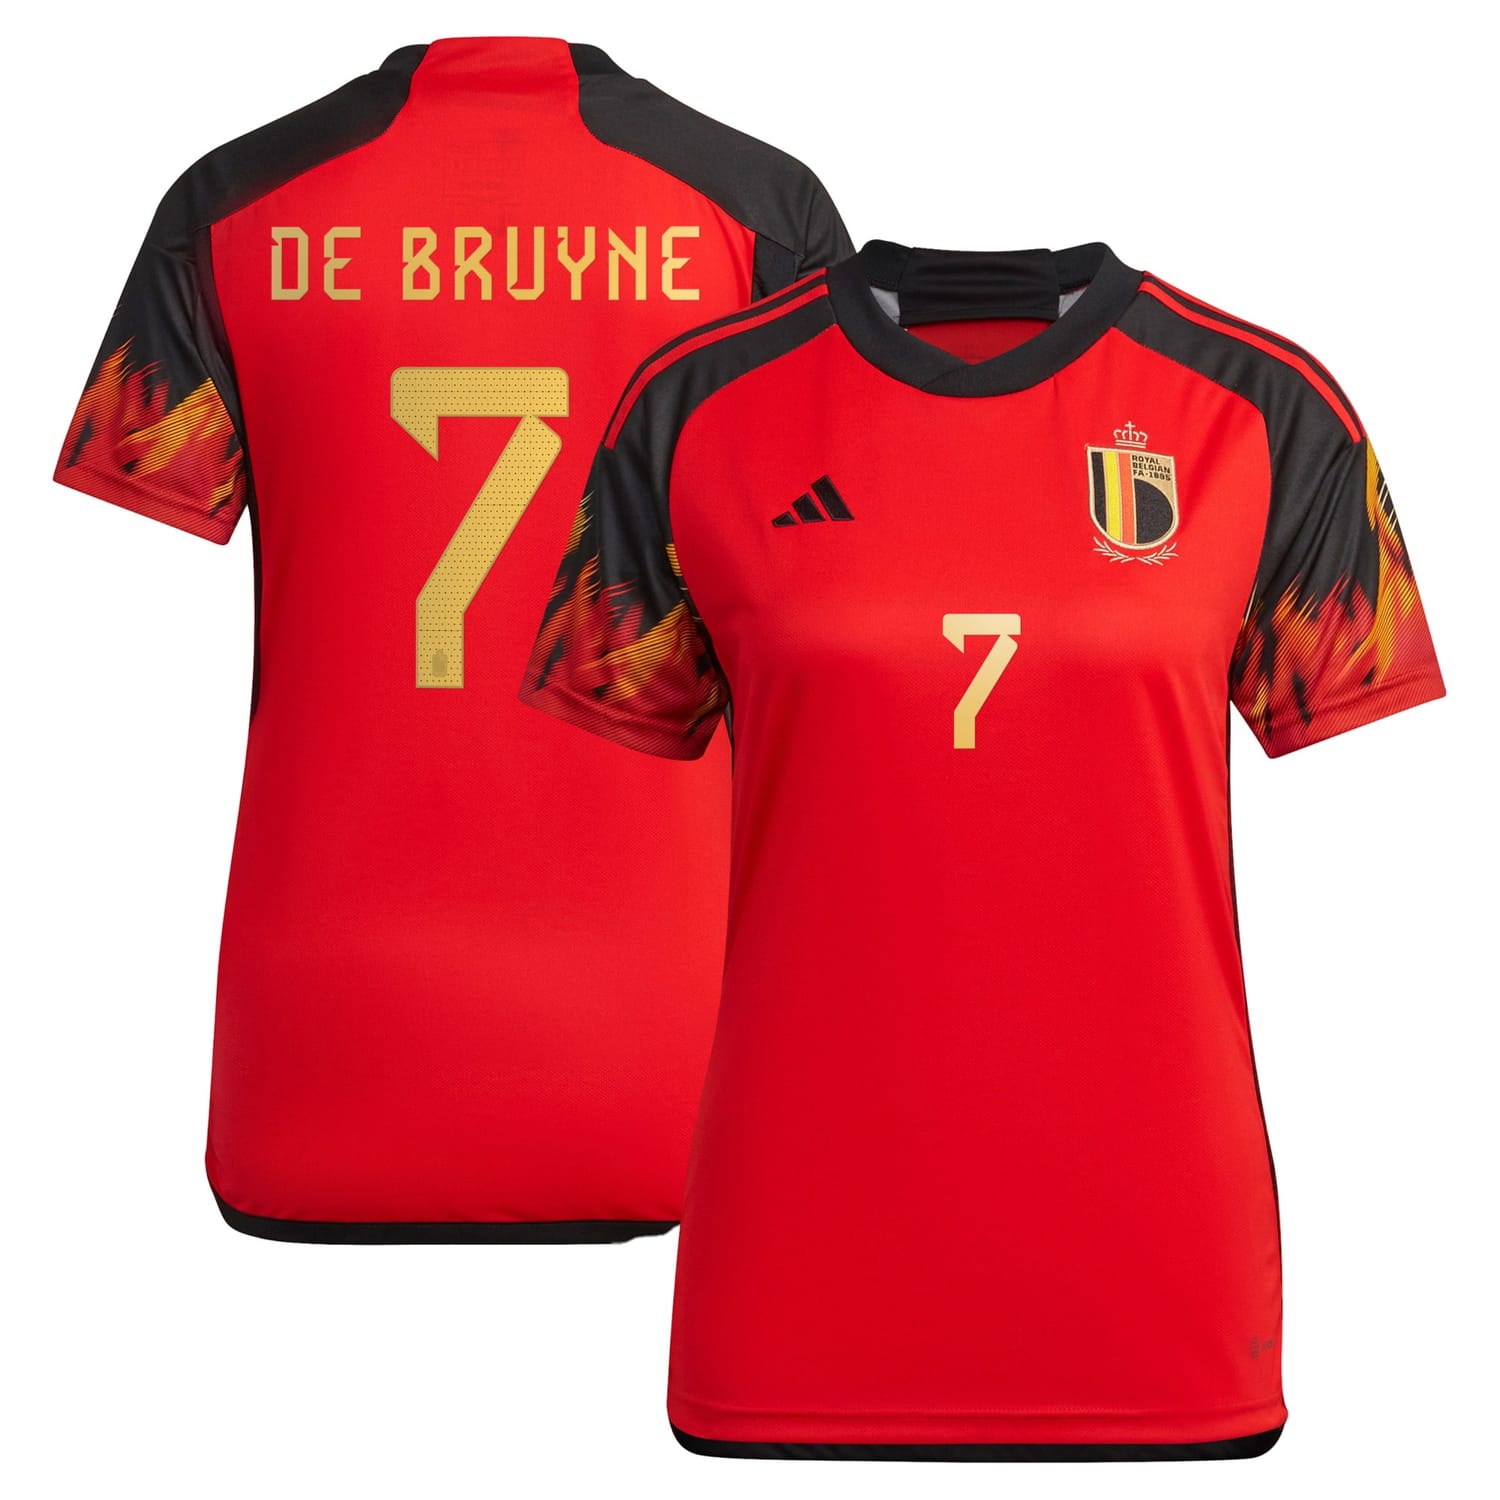 Belgium National Team Home Jersey Shirt player Kevin De Bruyne 7 printing for Women